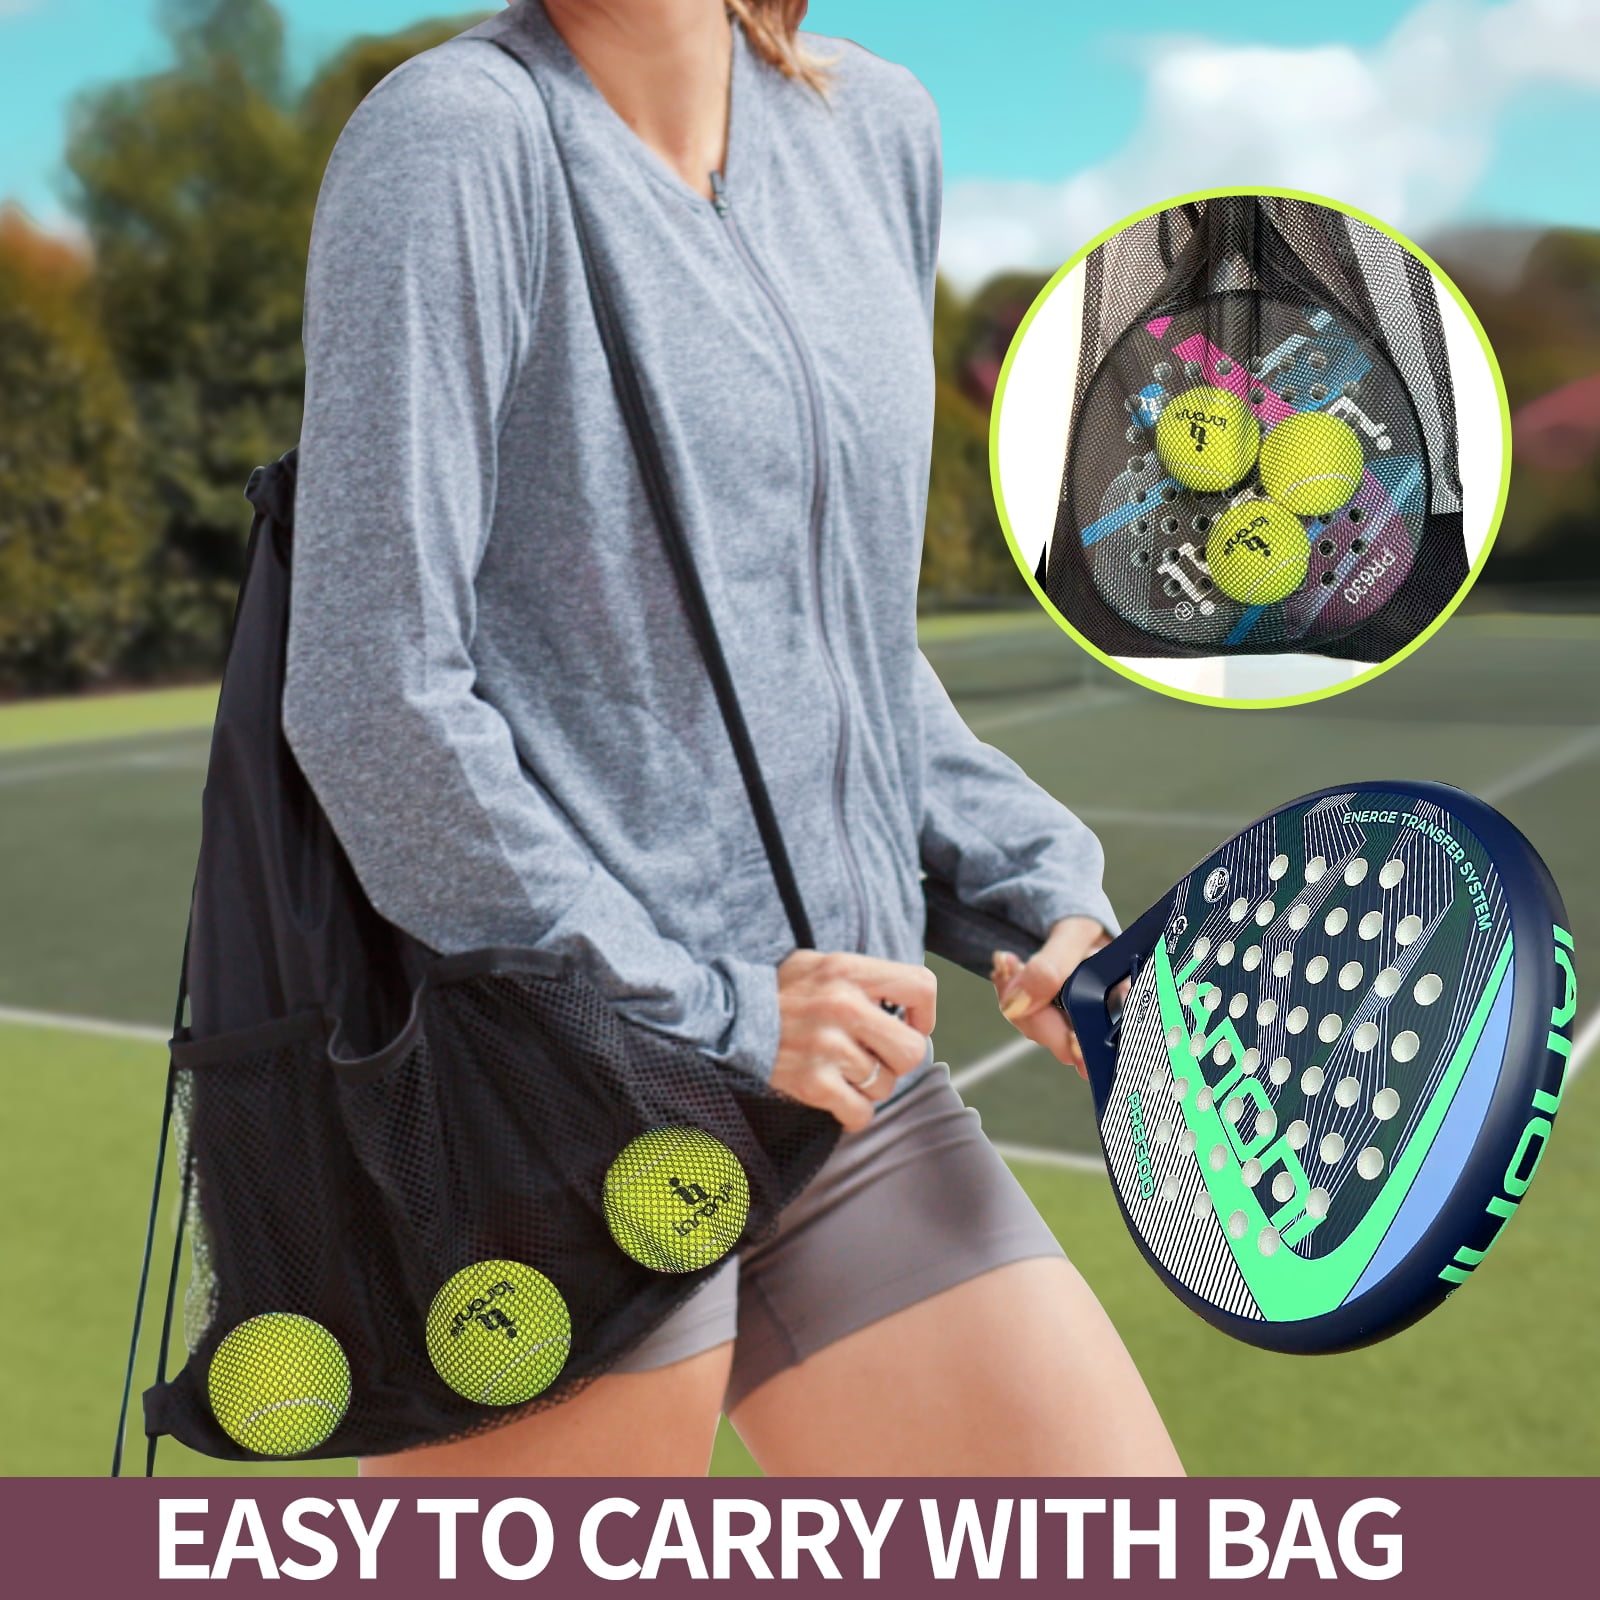 Senston Paddle Tennis Racket Carbon Fiber Surface with EVA Memory Flex-Foam  Core - Padel Racket with…See more Senston Paddle Tennis Racket Carbon